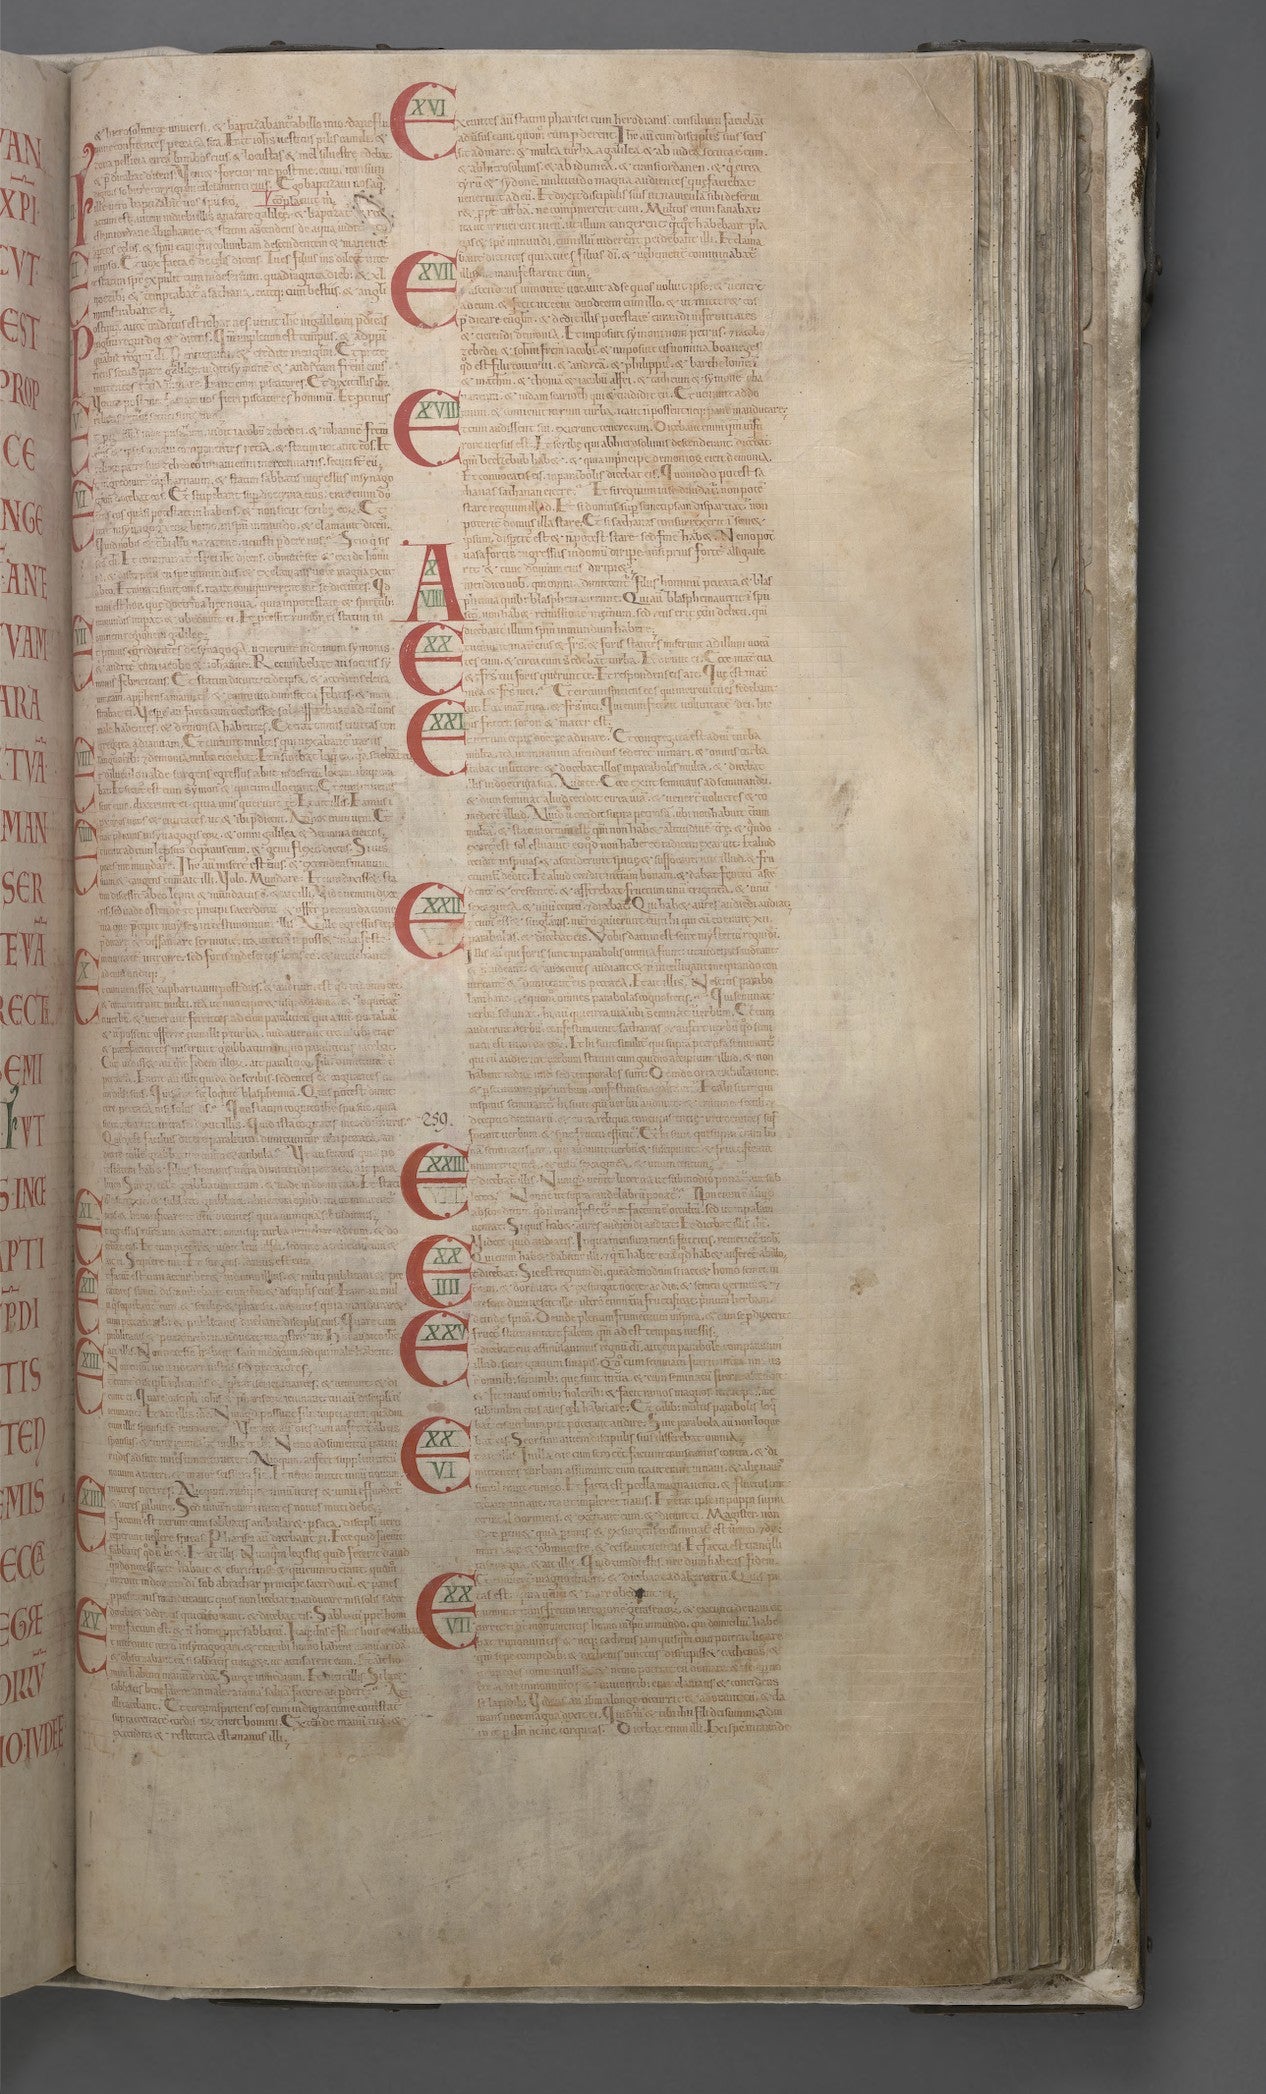 Codex Gigas - The Devil's Bible